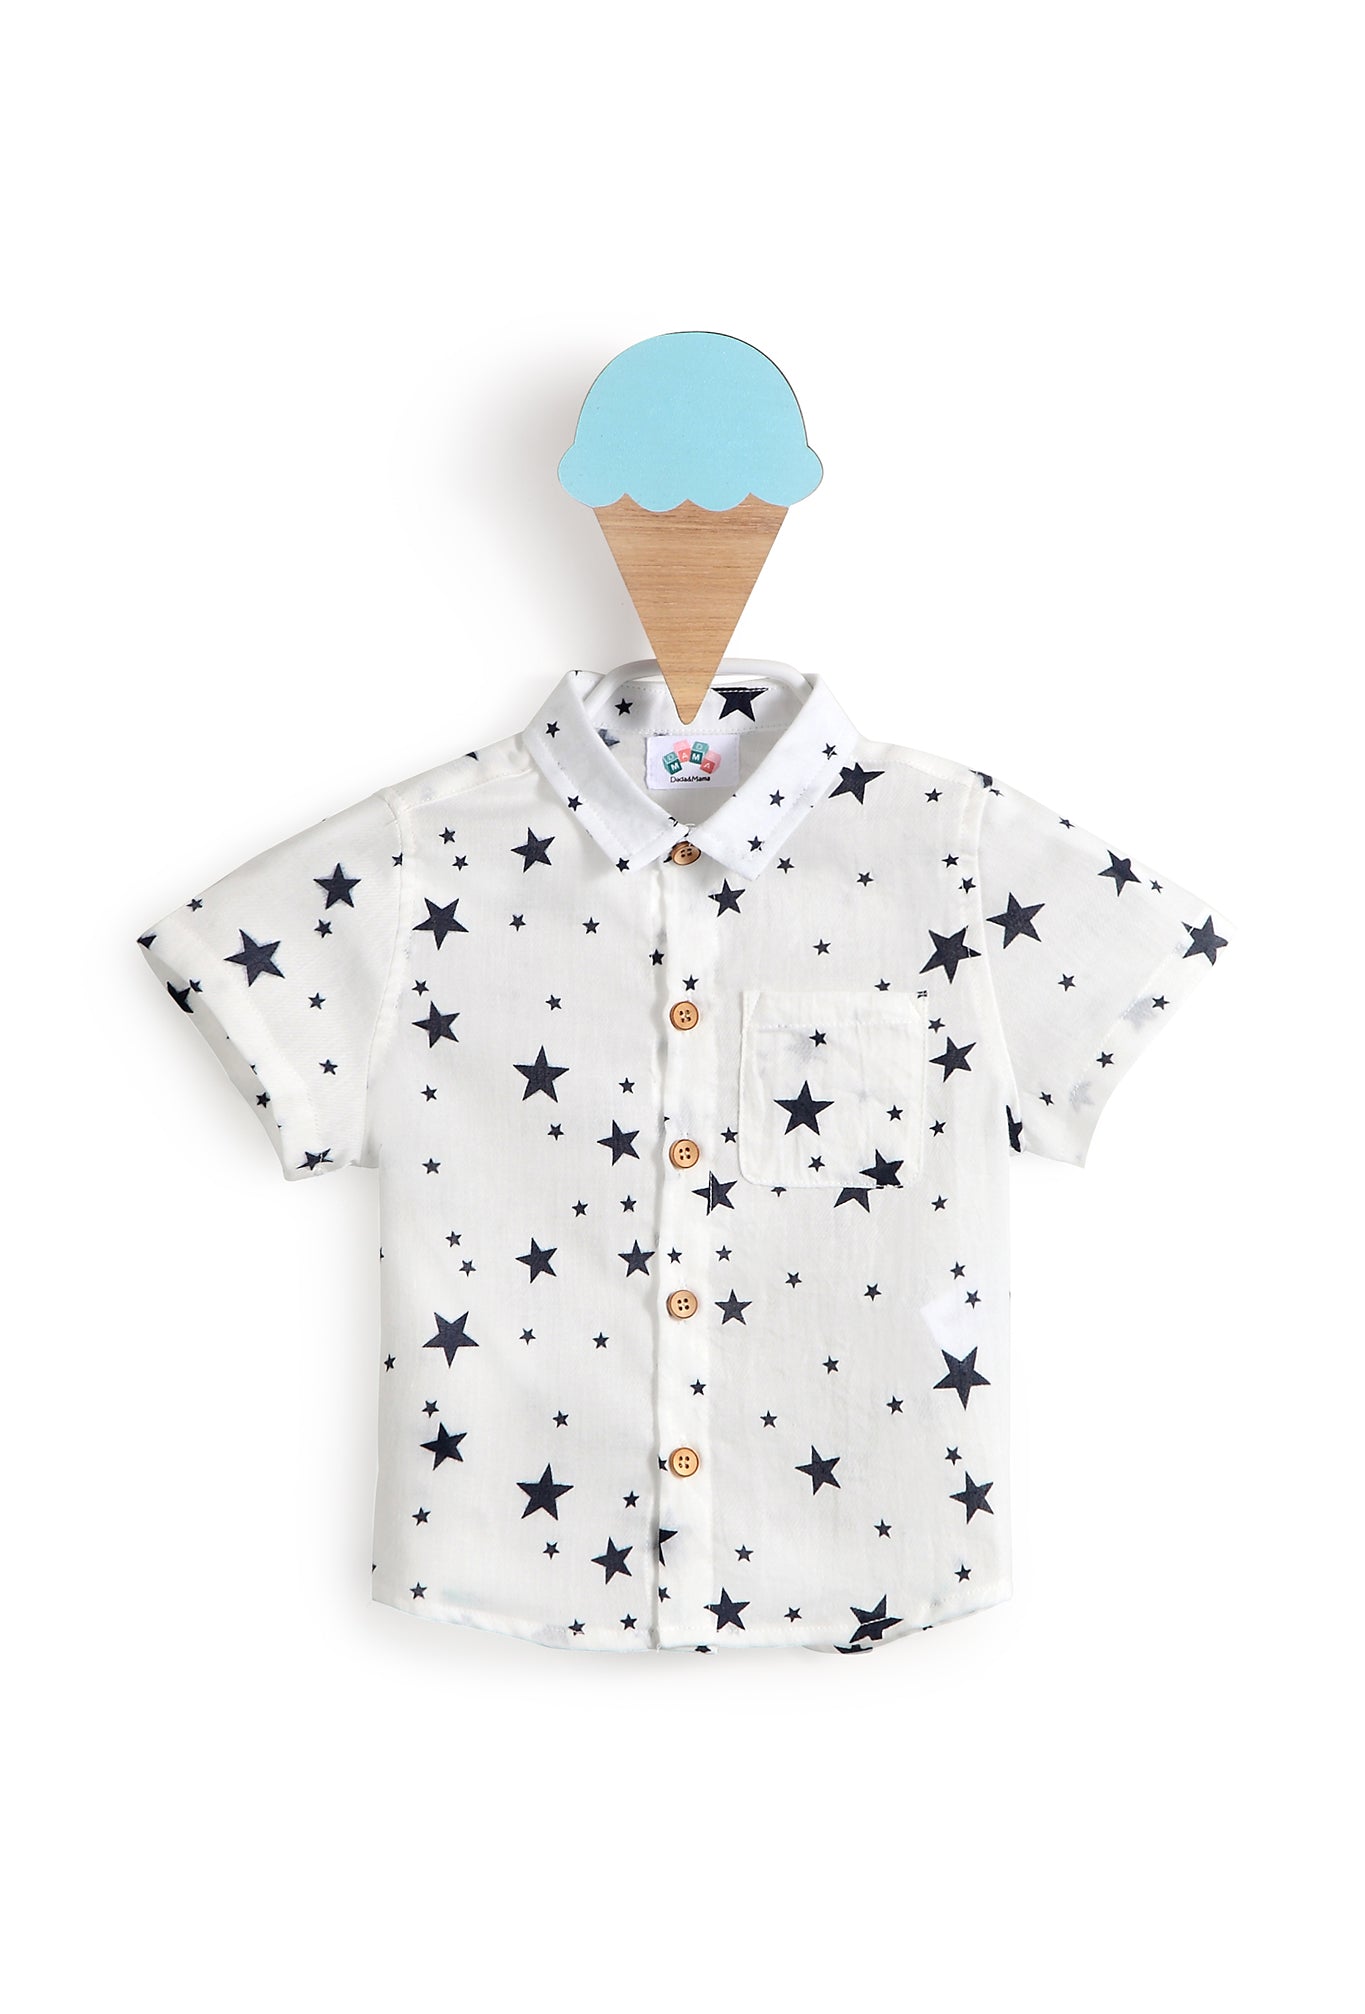 Superstar Button Down Baby Boy Shirt 